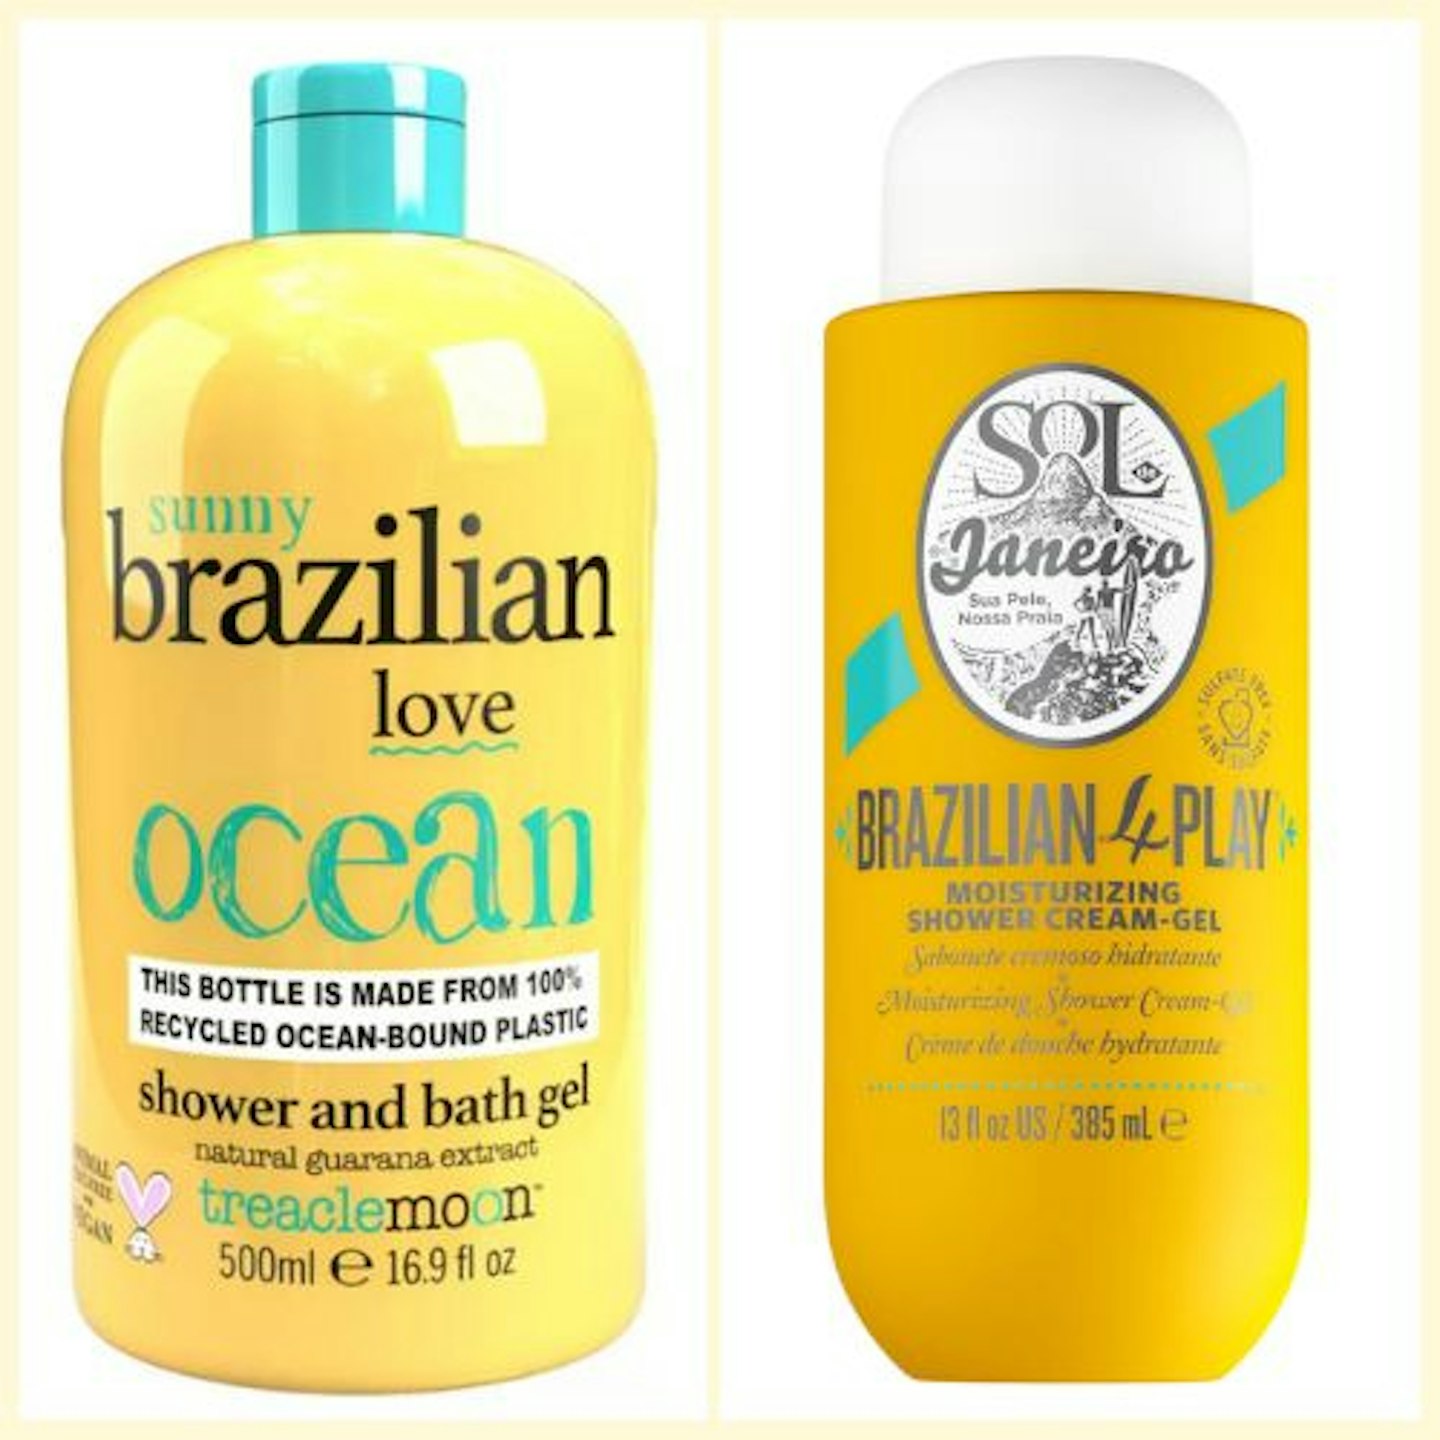 Sol de Janeiro Brazilian 4 Play Moisturizing Shower Cream-Gel dupe